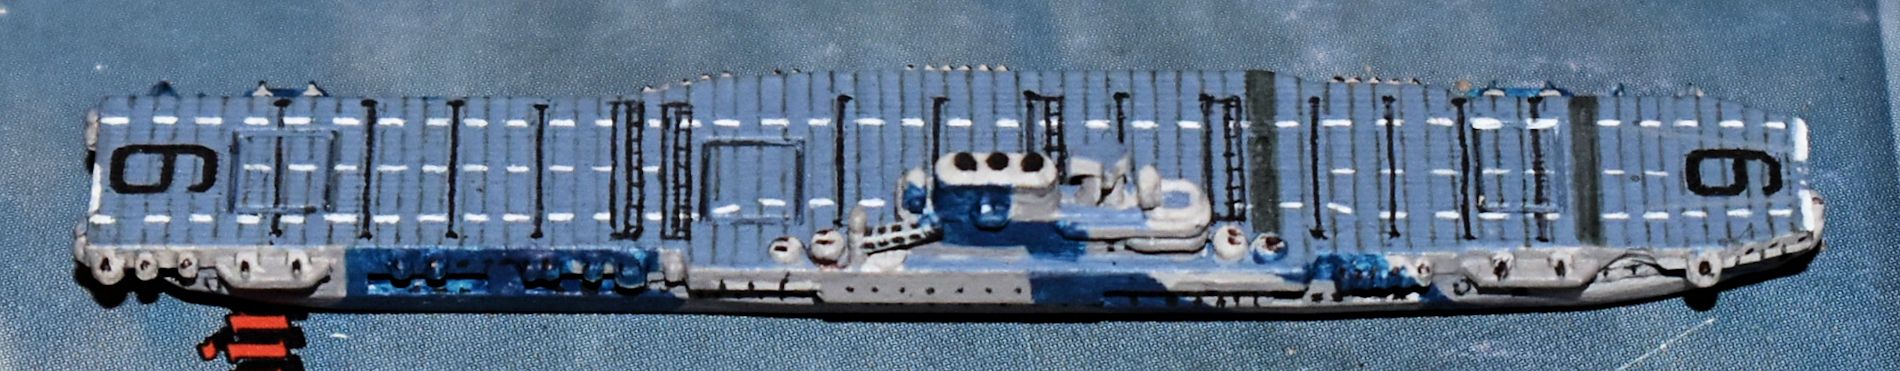 DSC_0044-USS Enterprise (CV-6).jpg